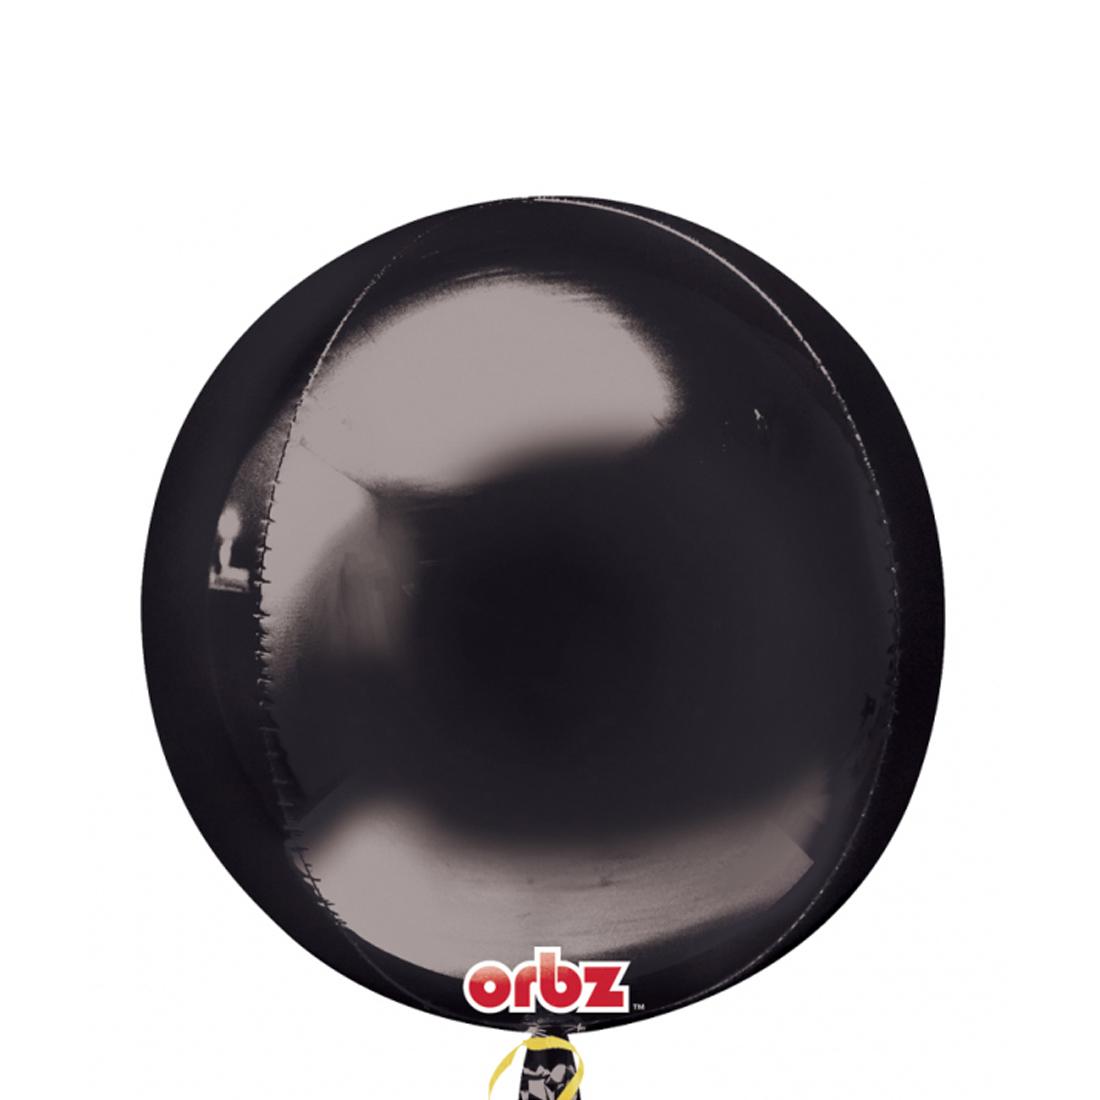 Black Orbz Foil Balloon 38x40cm Balloons & Streamers - Party Centre - Party Centre